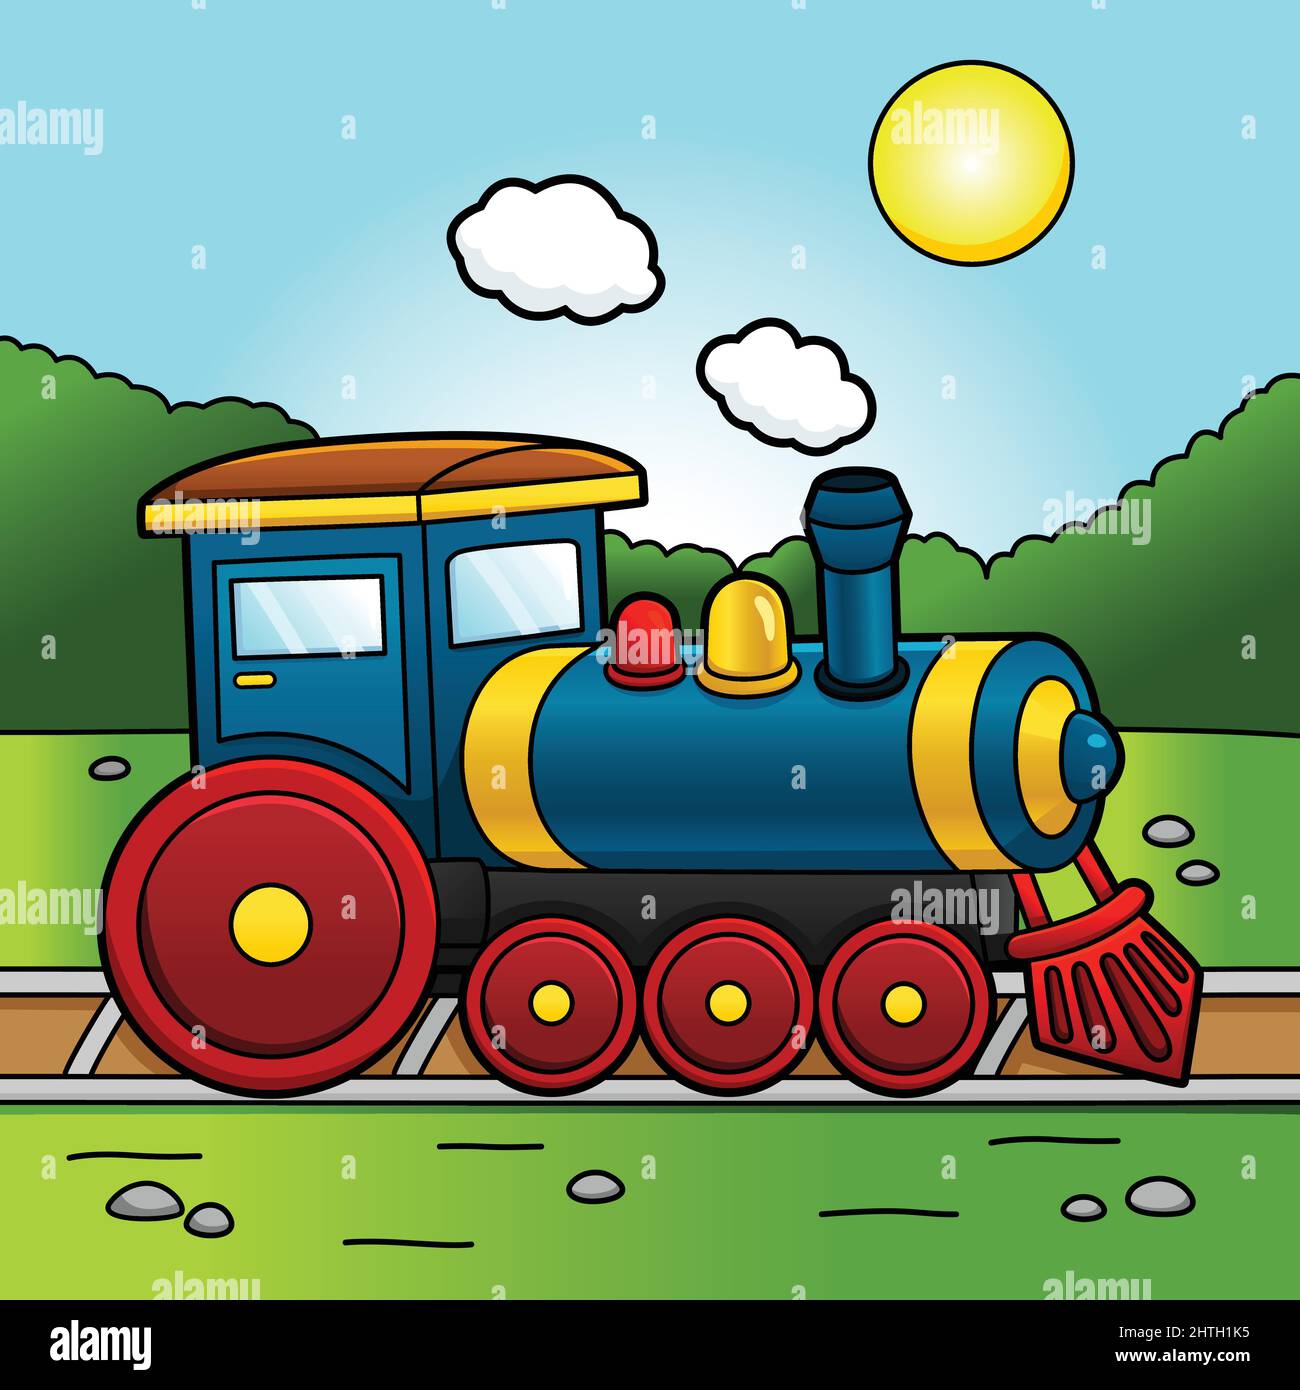 Steam Locomotive Cartoon Vehicle Illustration Stock Vector